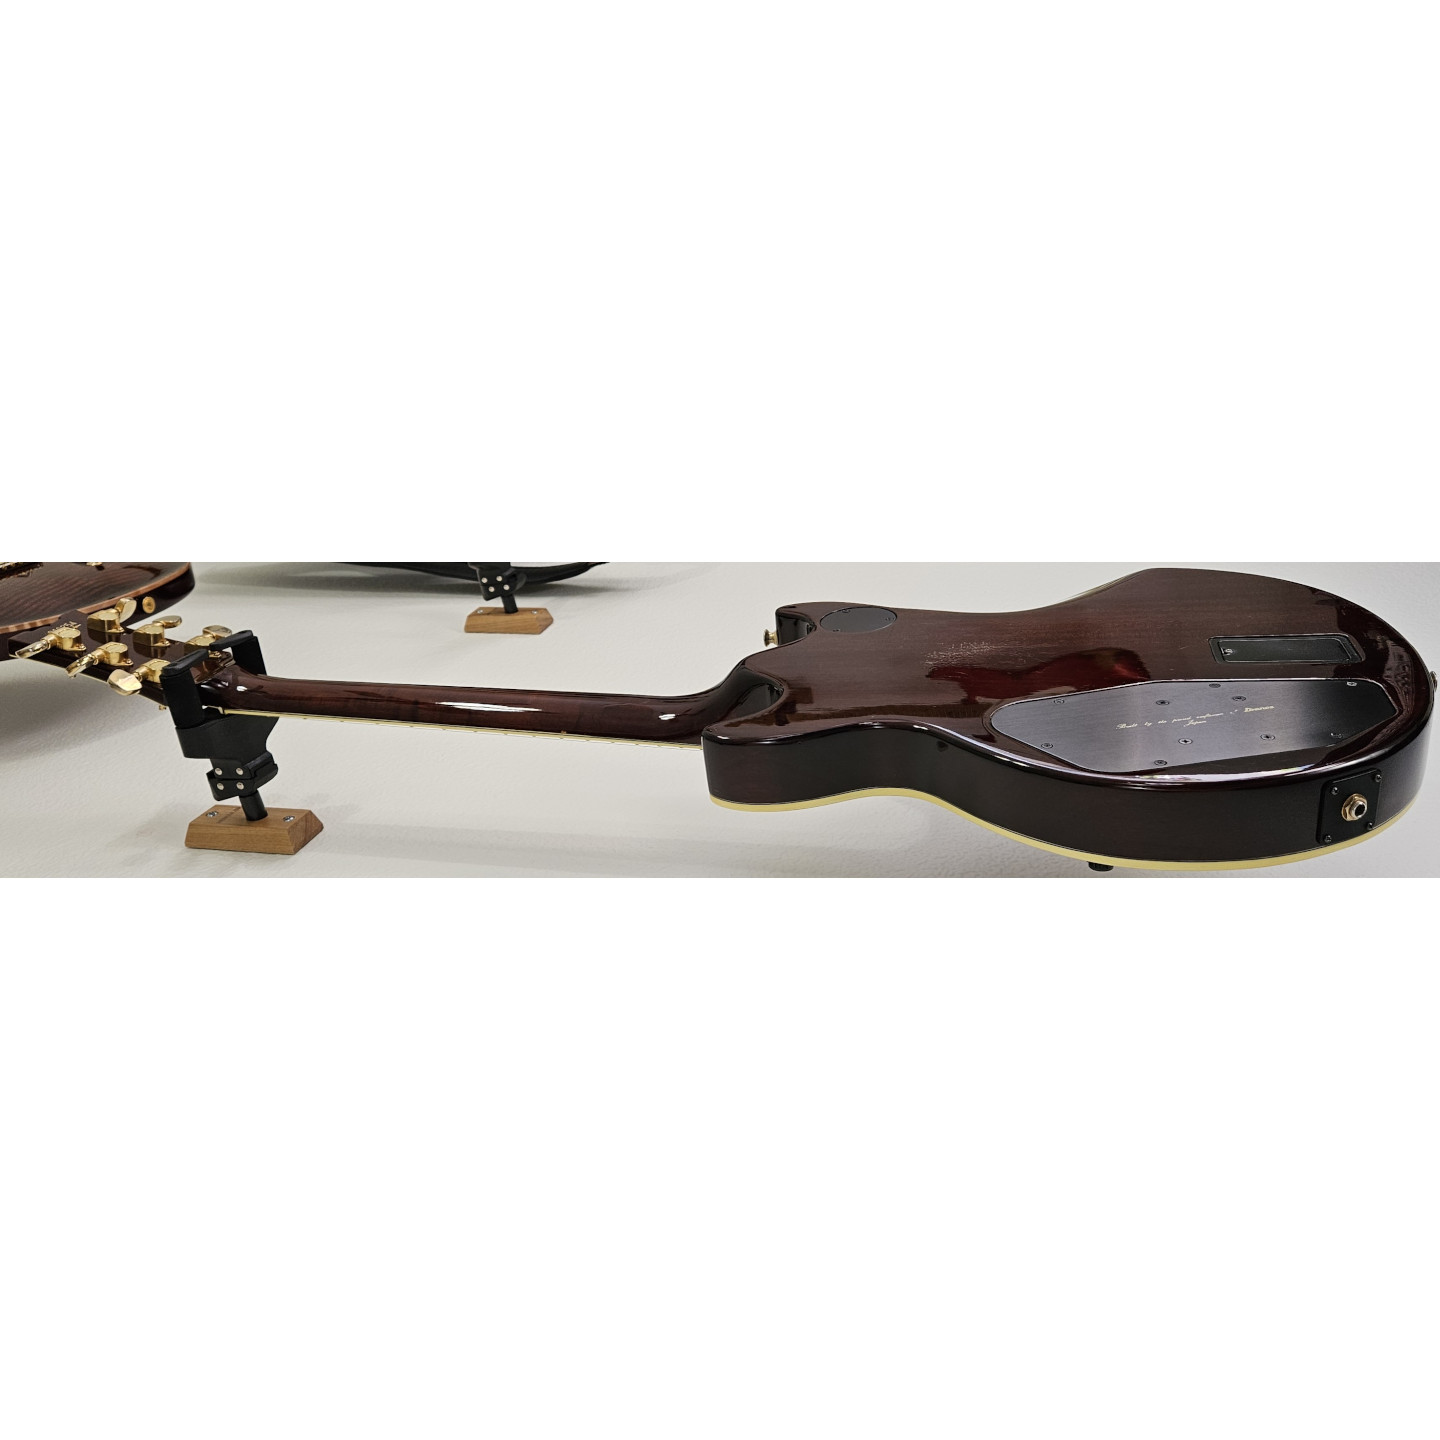 1981 Ibanez AR-500 Artist Antique Violin Vintage Electric Guitar